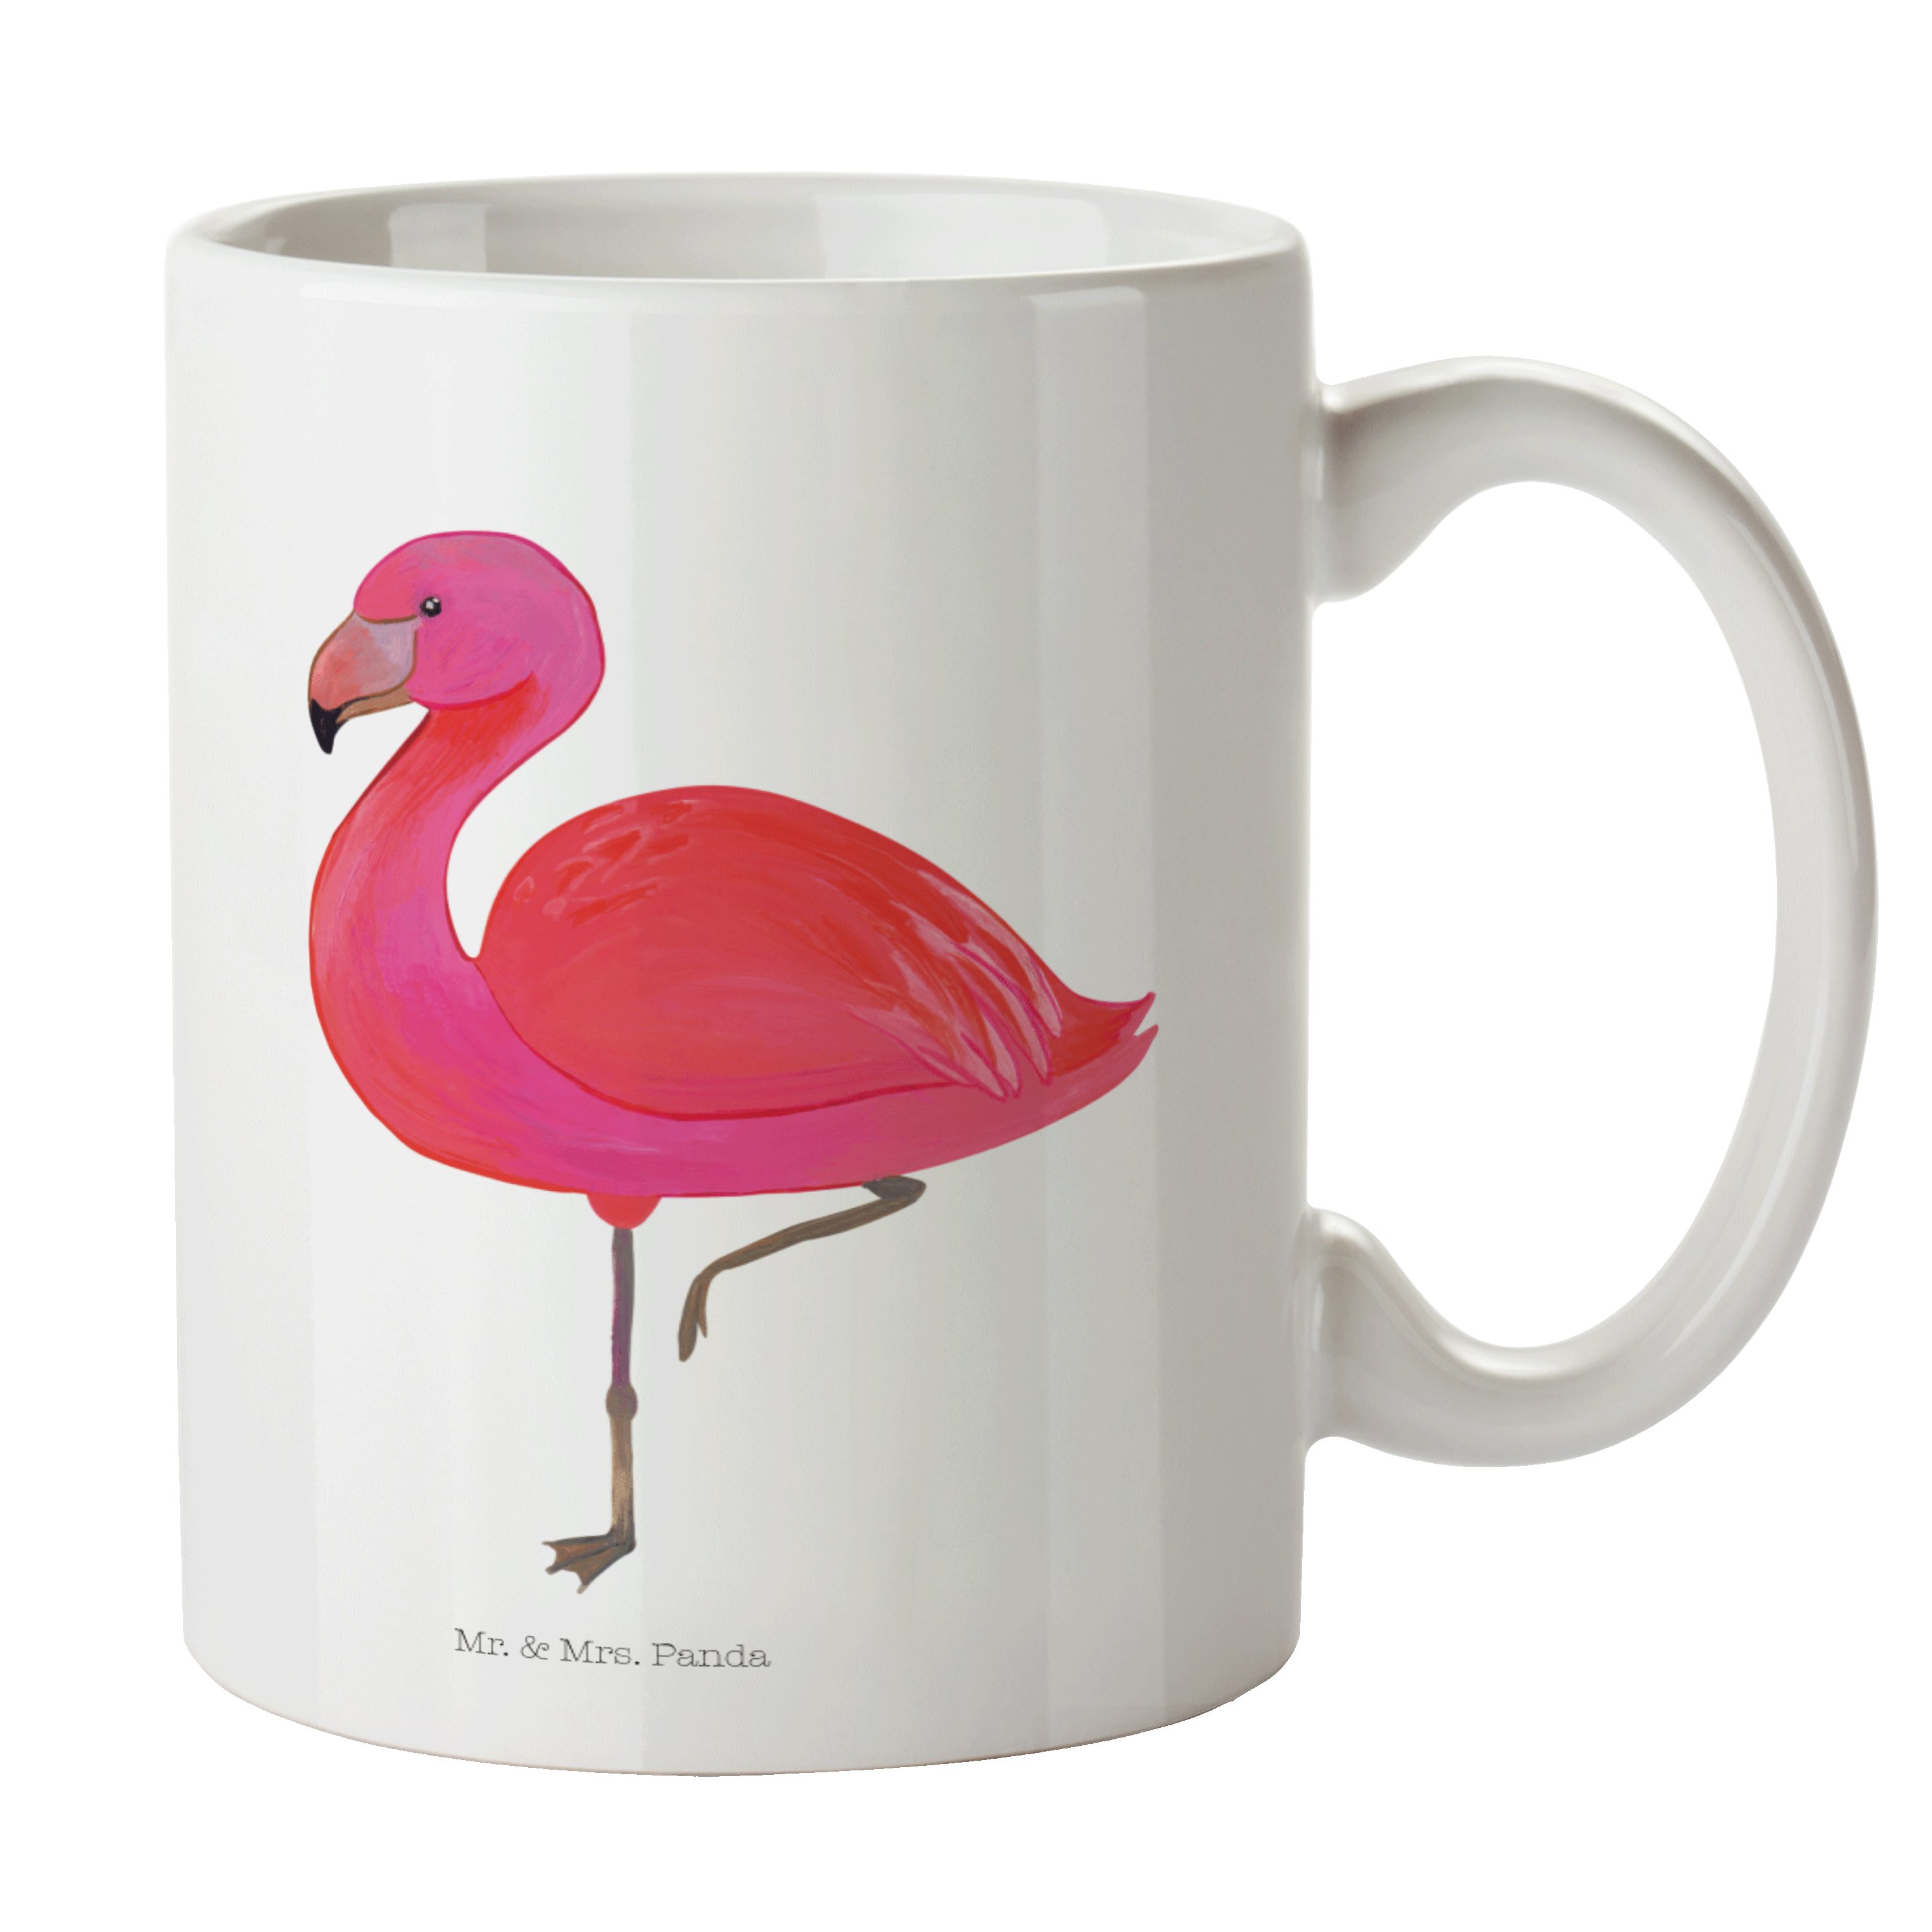 Mr. & Mrs. Panda Tasse Flamingo classic - Weiß - Geschenk, Tasse, Tasse Motive, rosa, Kerami, Keramik